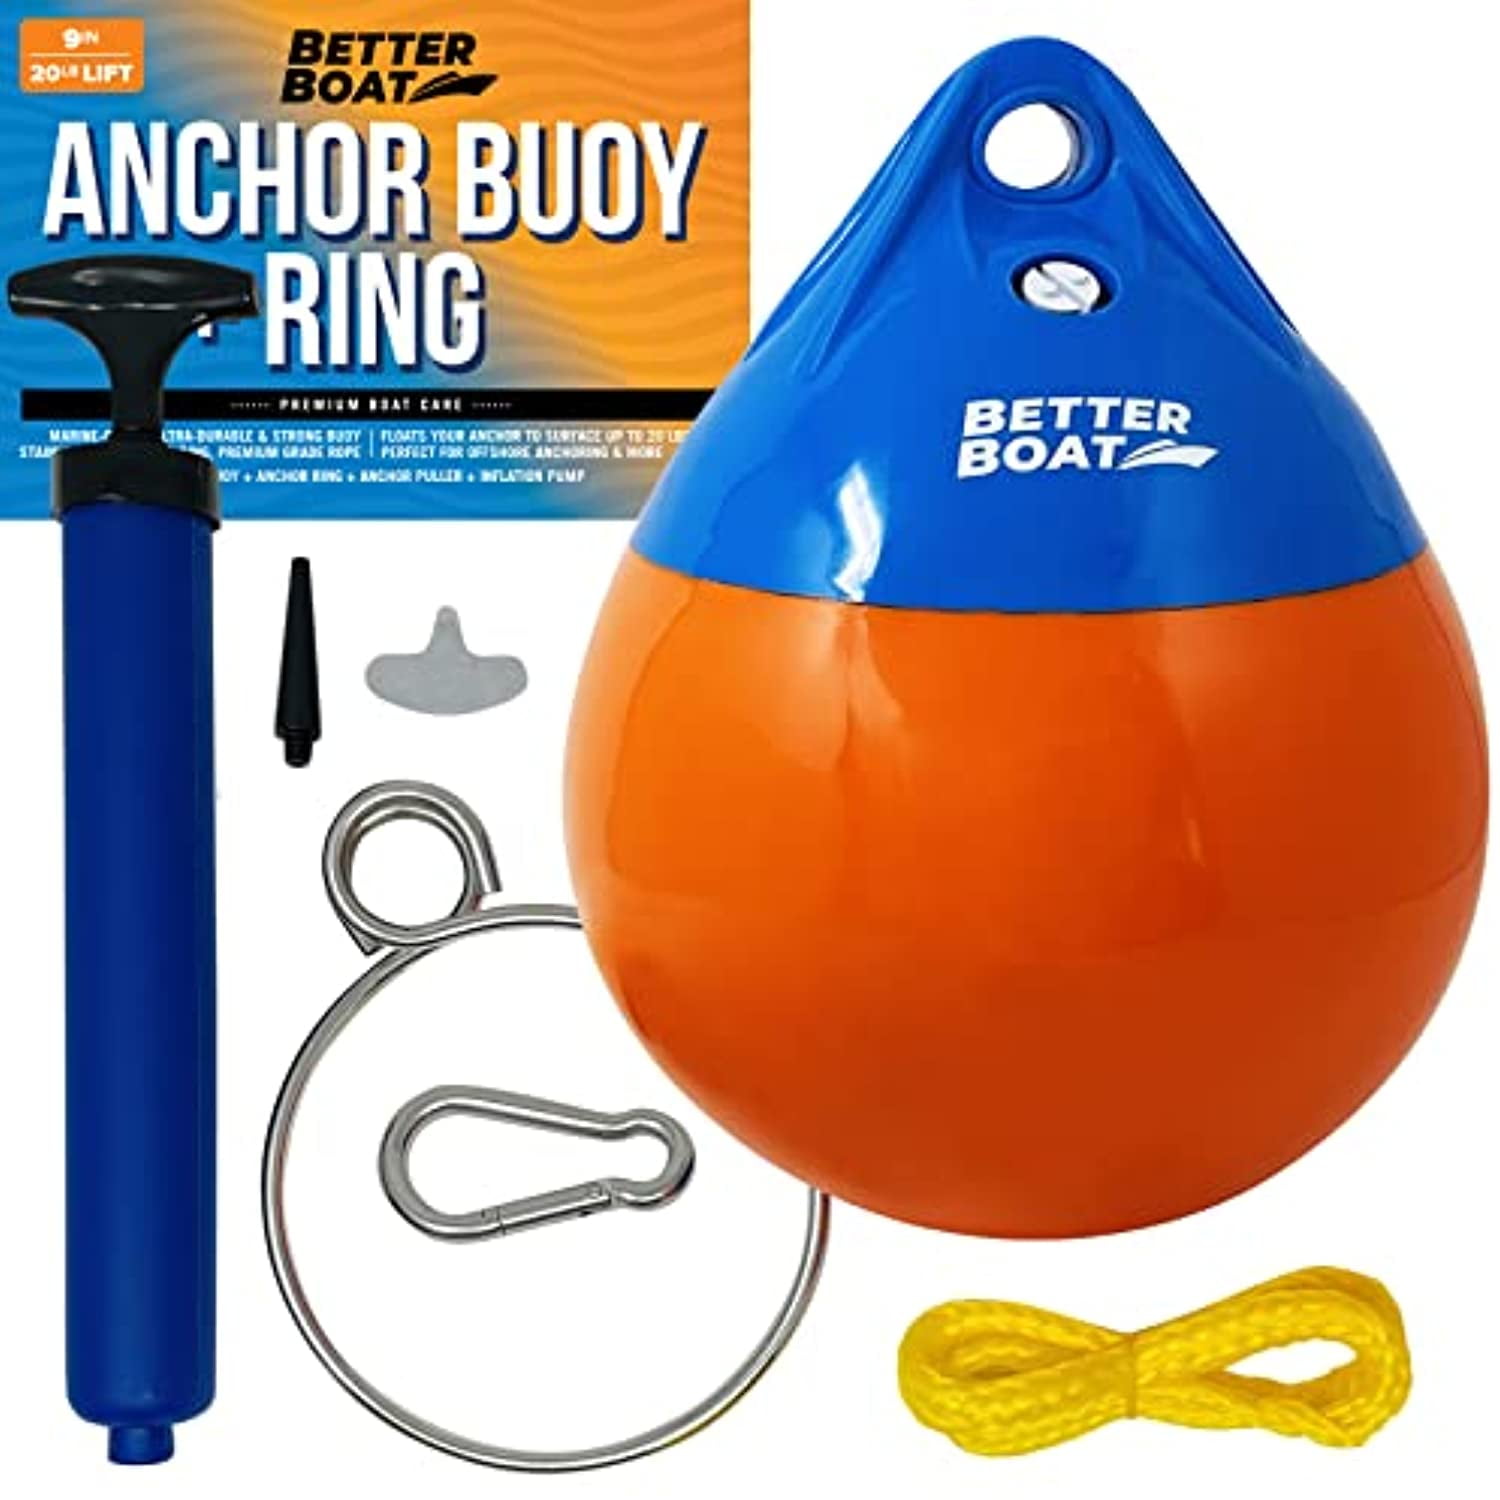 Better Boat Anchor Buoy and Retrieval Ring 9 inch Vinyl Boat Balls Round Boat Mooring Buoys, Orange